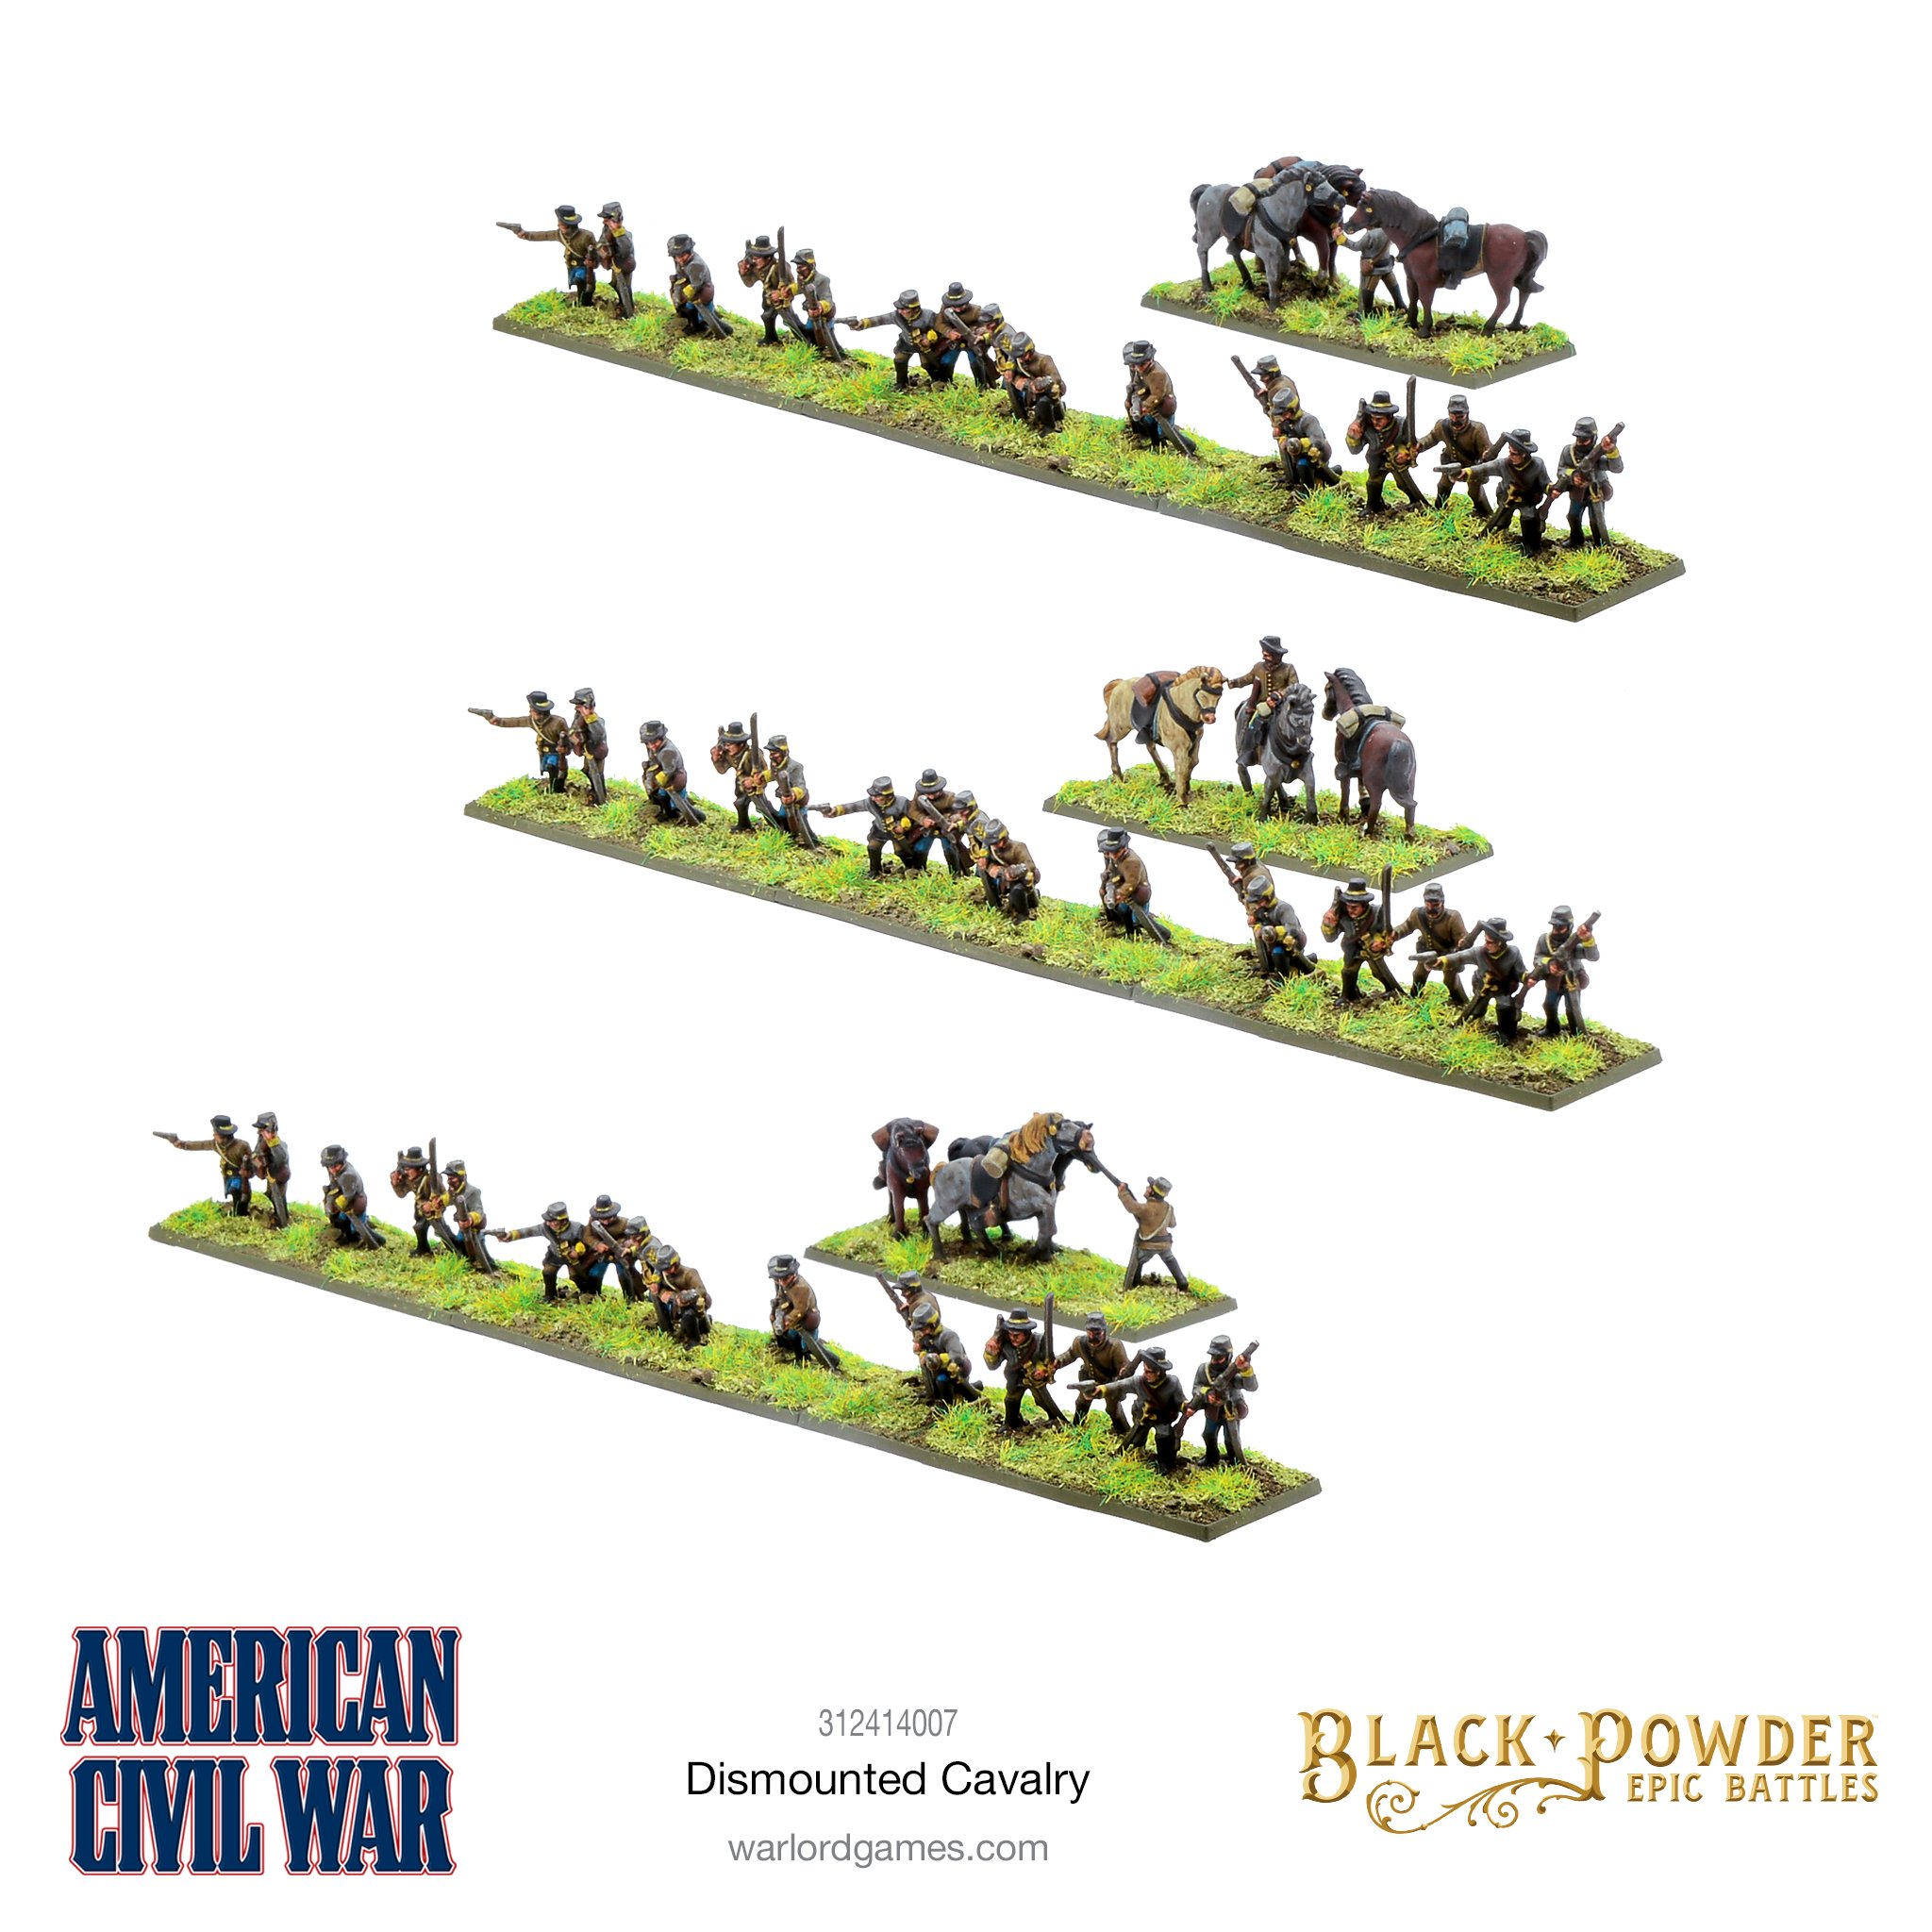 Dismounted Cavalry - Black Powder Epic Battles